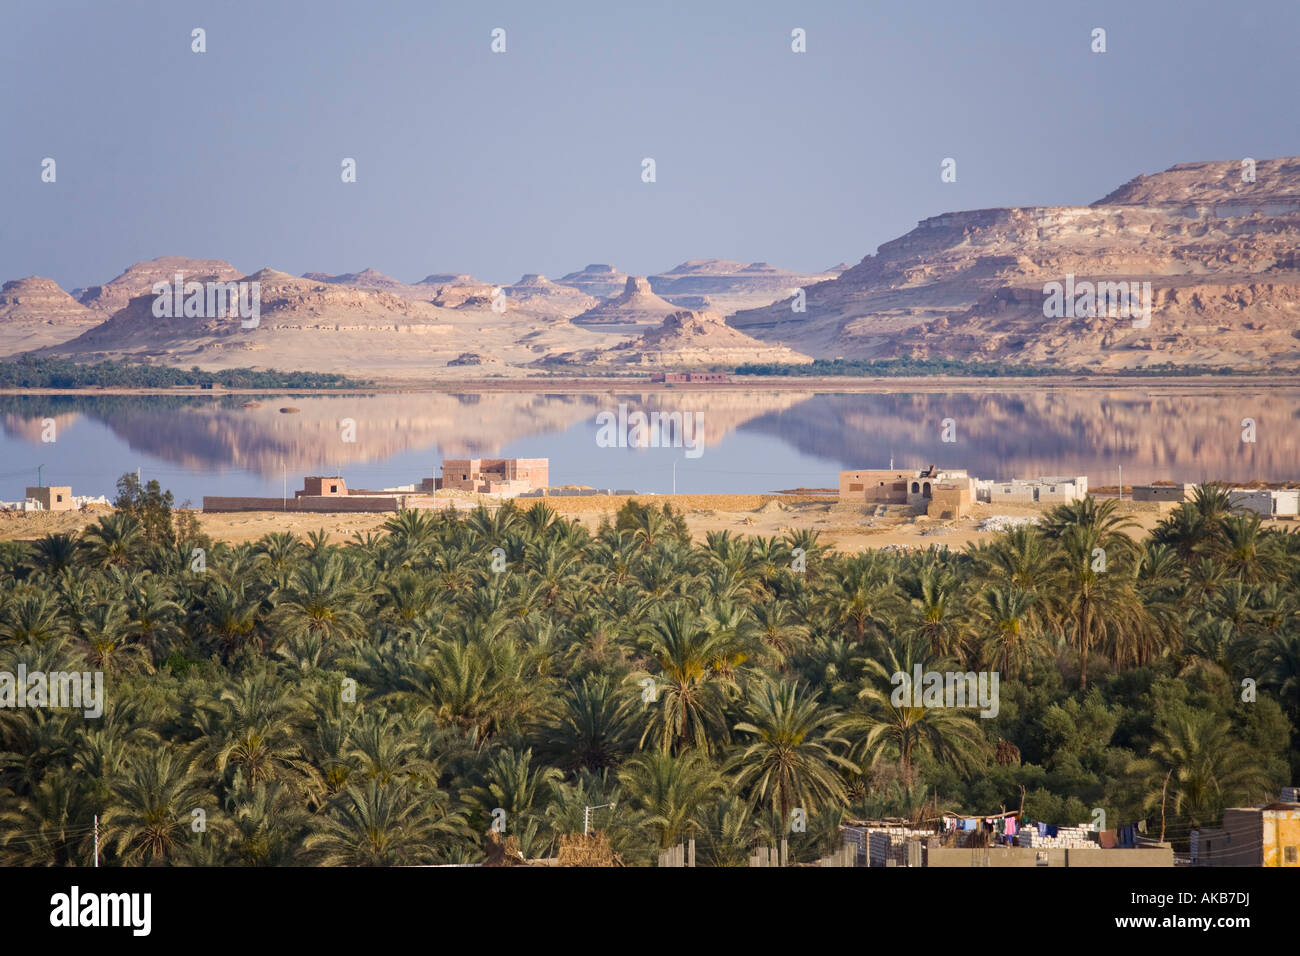 Landscape around Siwa town, Siwa Oasis, Egypt Stock Photo